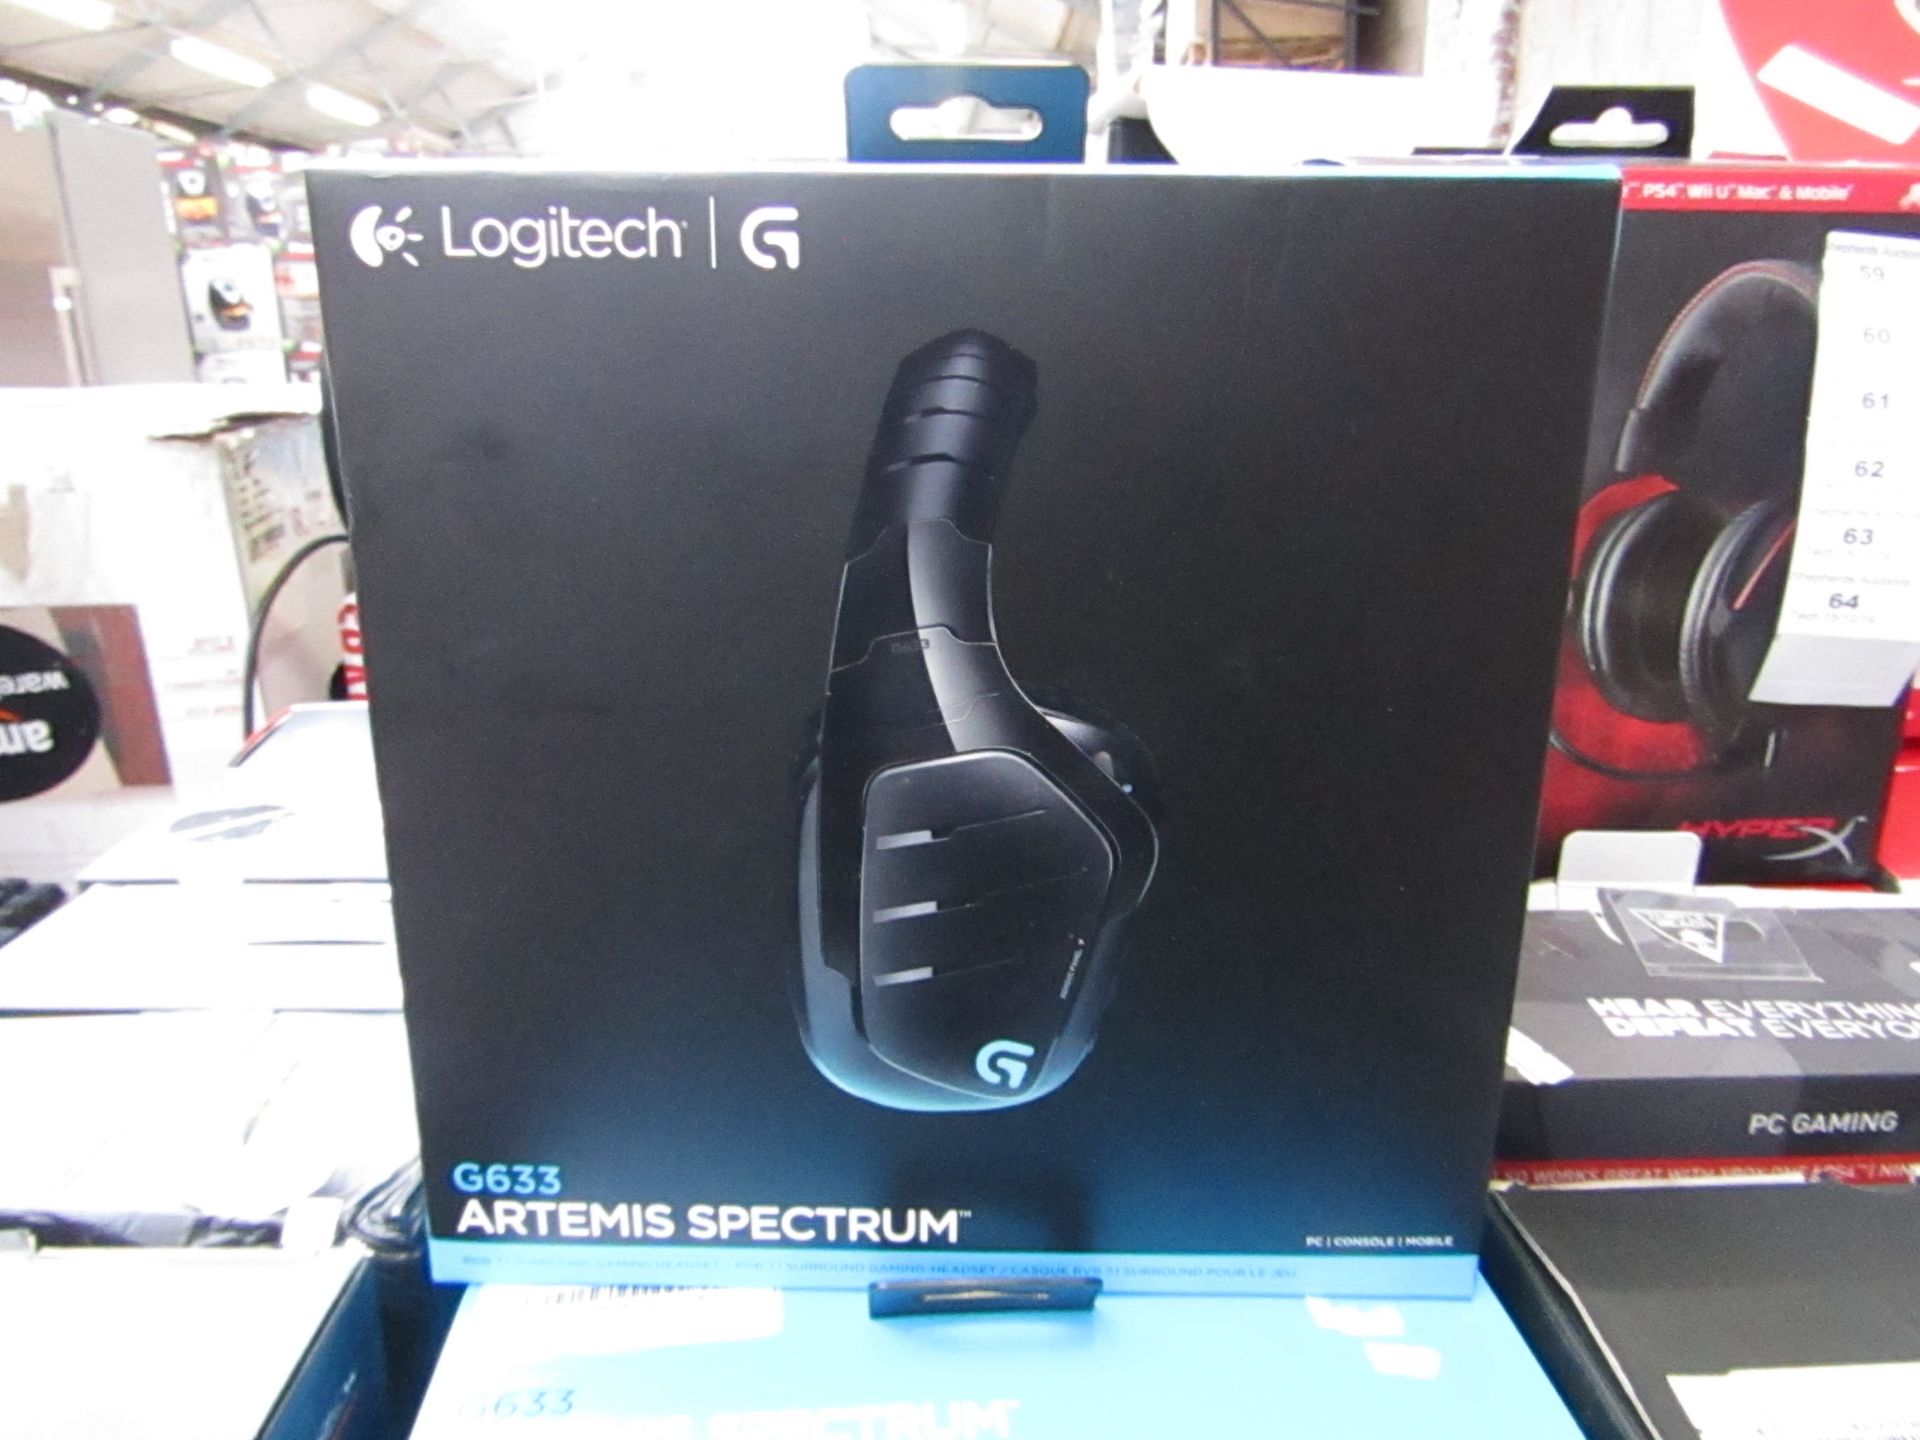 Logitech G633 Artemis Spectrum headphones, untested and boxed.